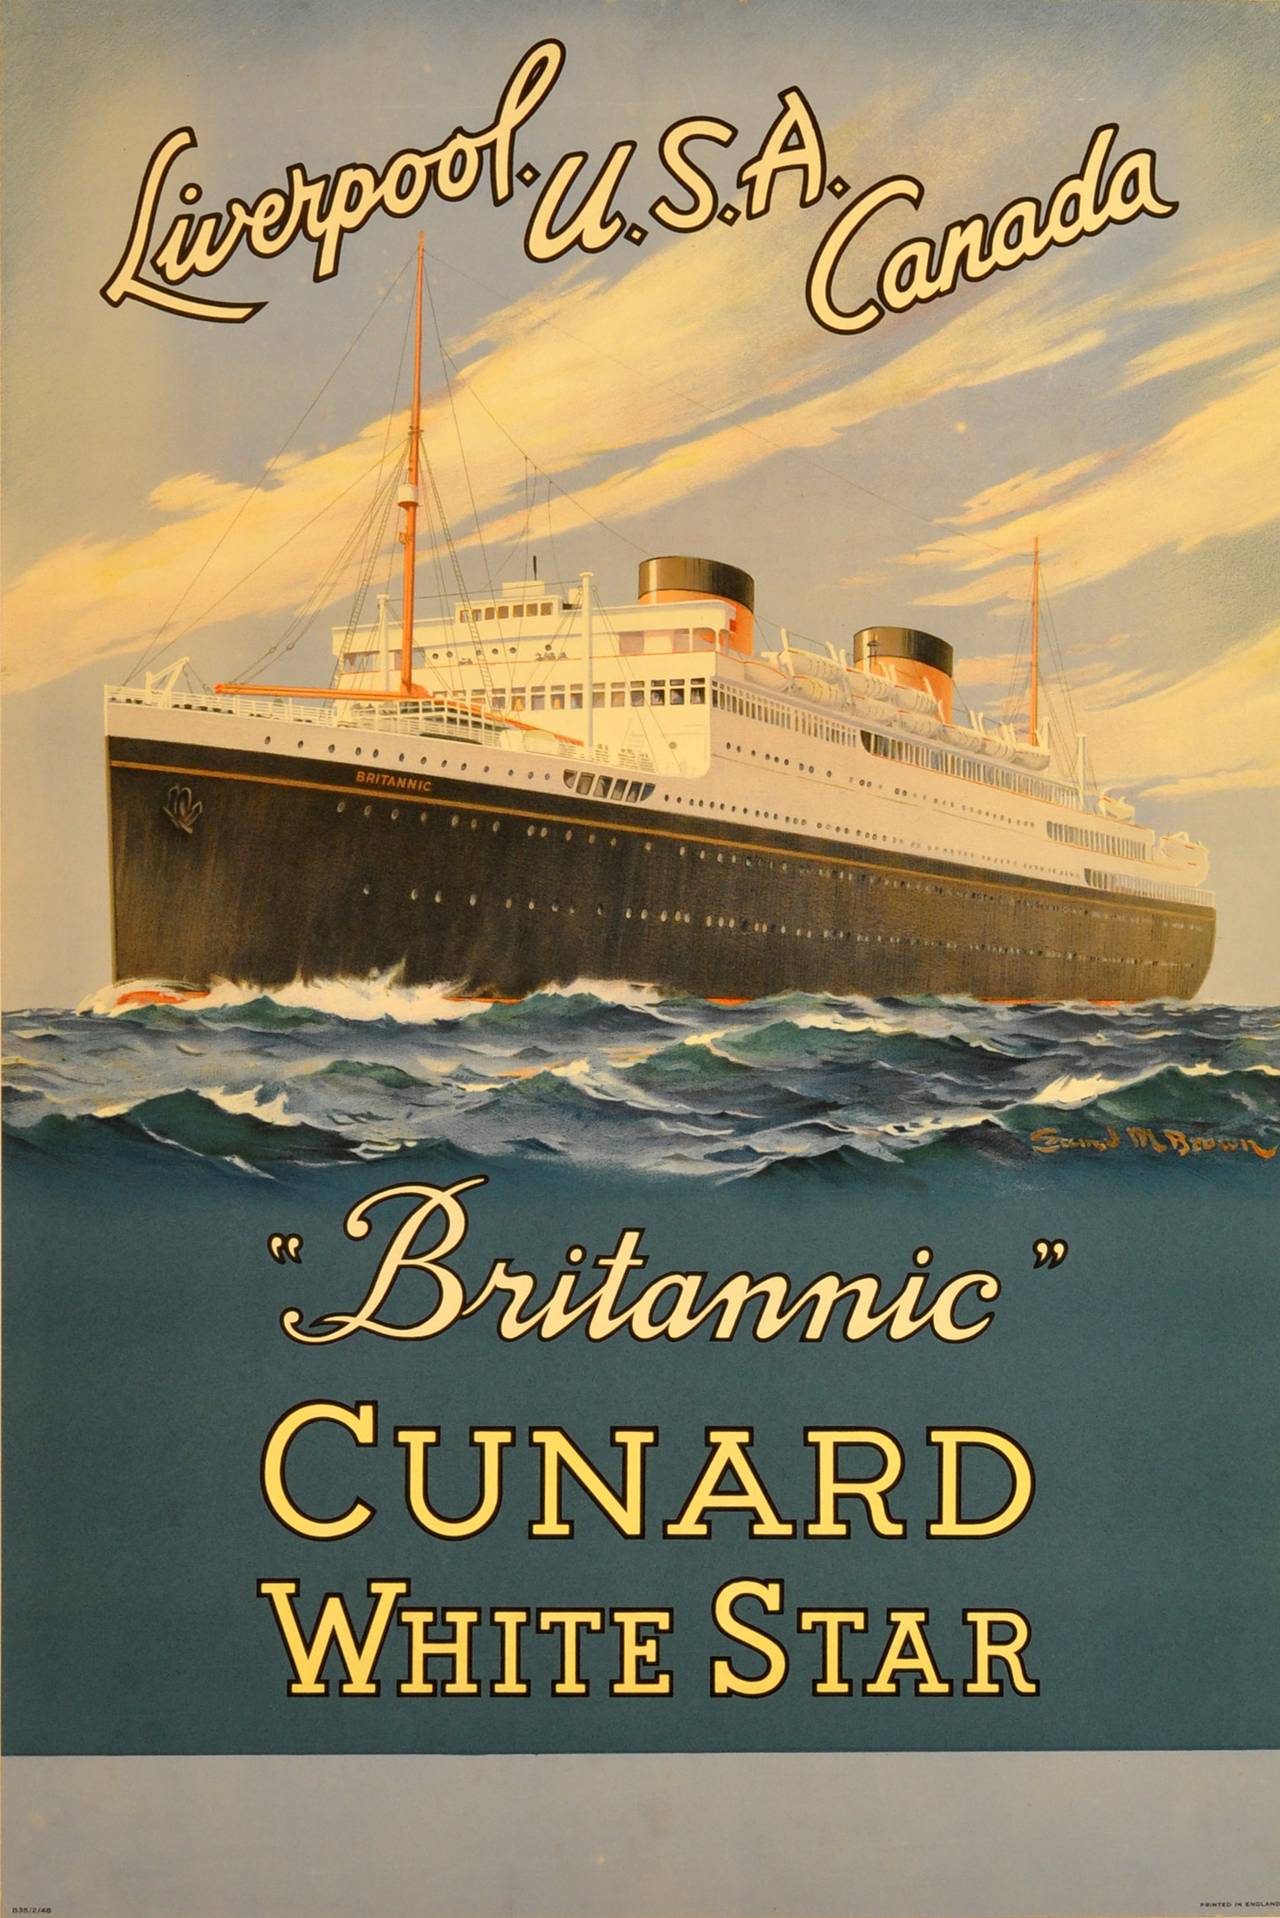 Samuel M Brown Print - Original vintage cruise ship poster - Britannic - Cunard White Star ocean liner